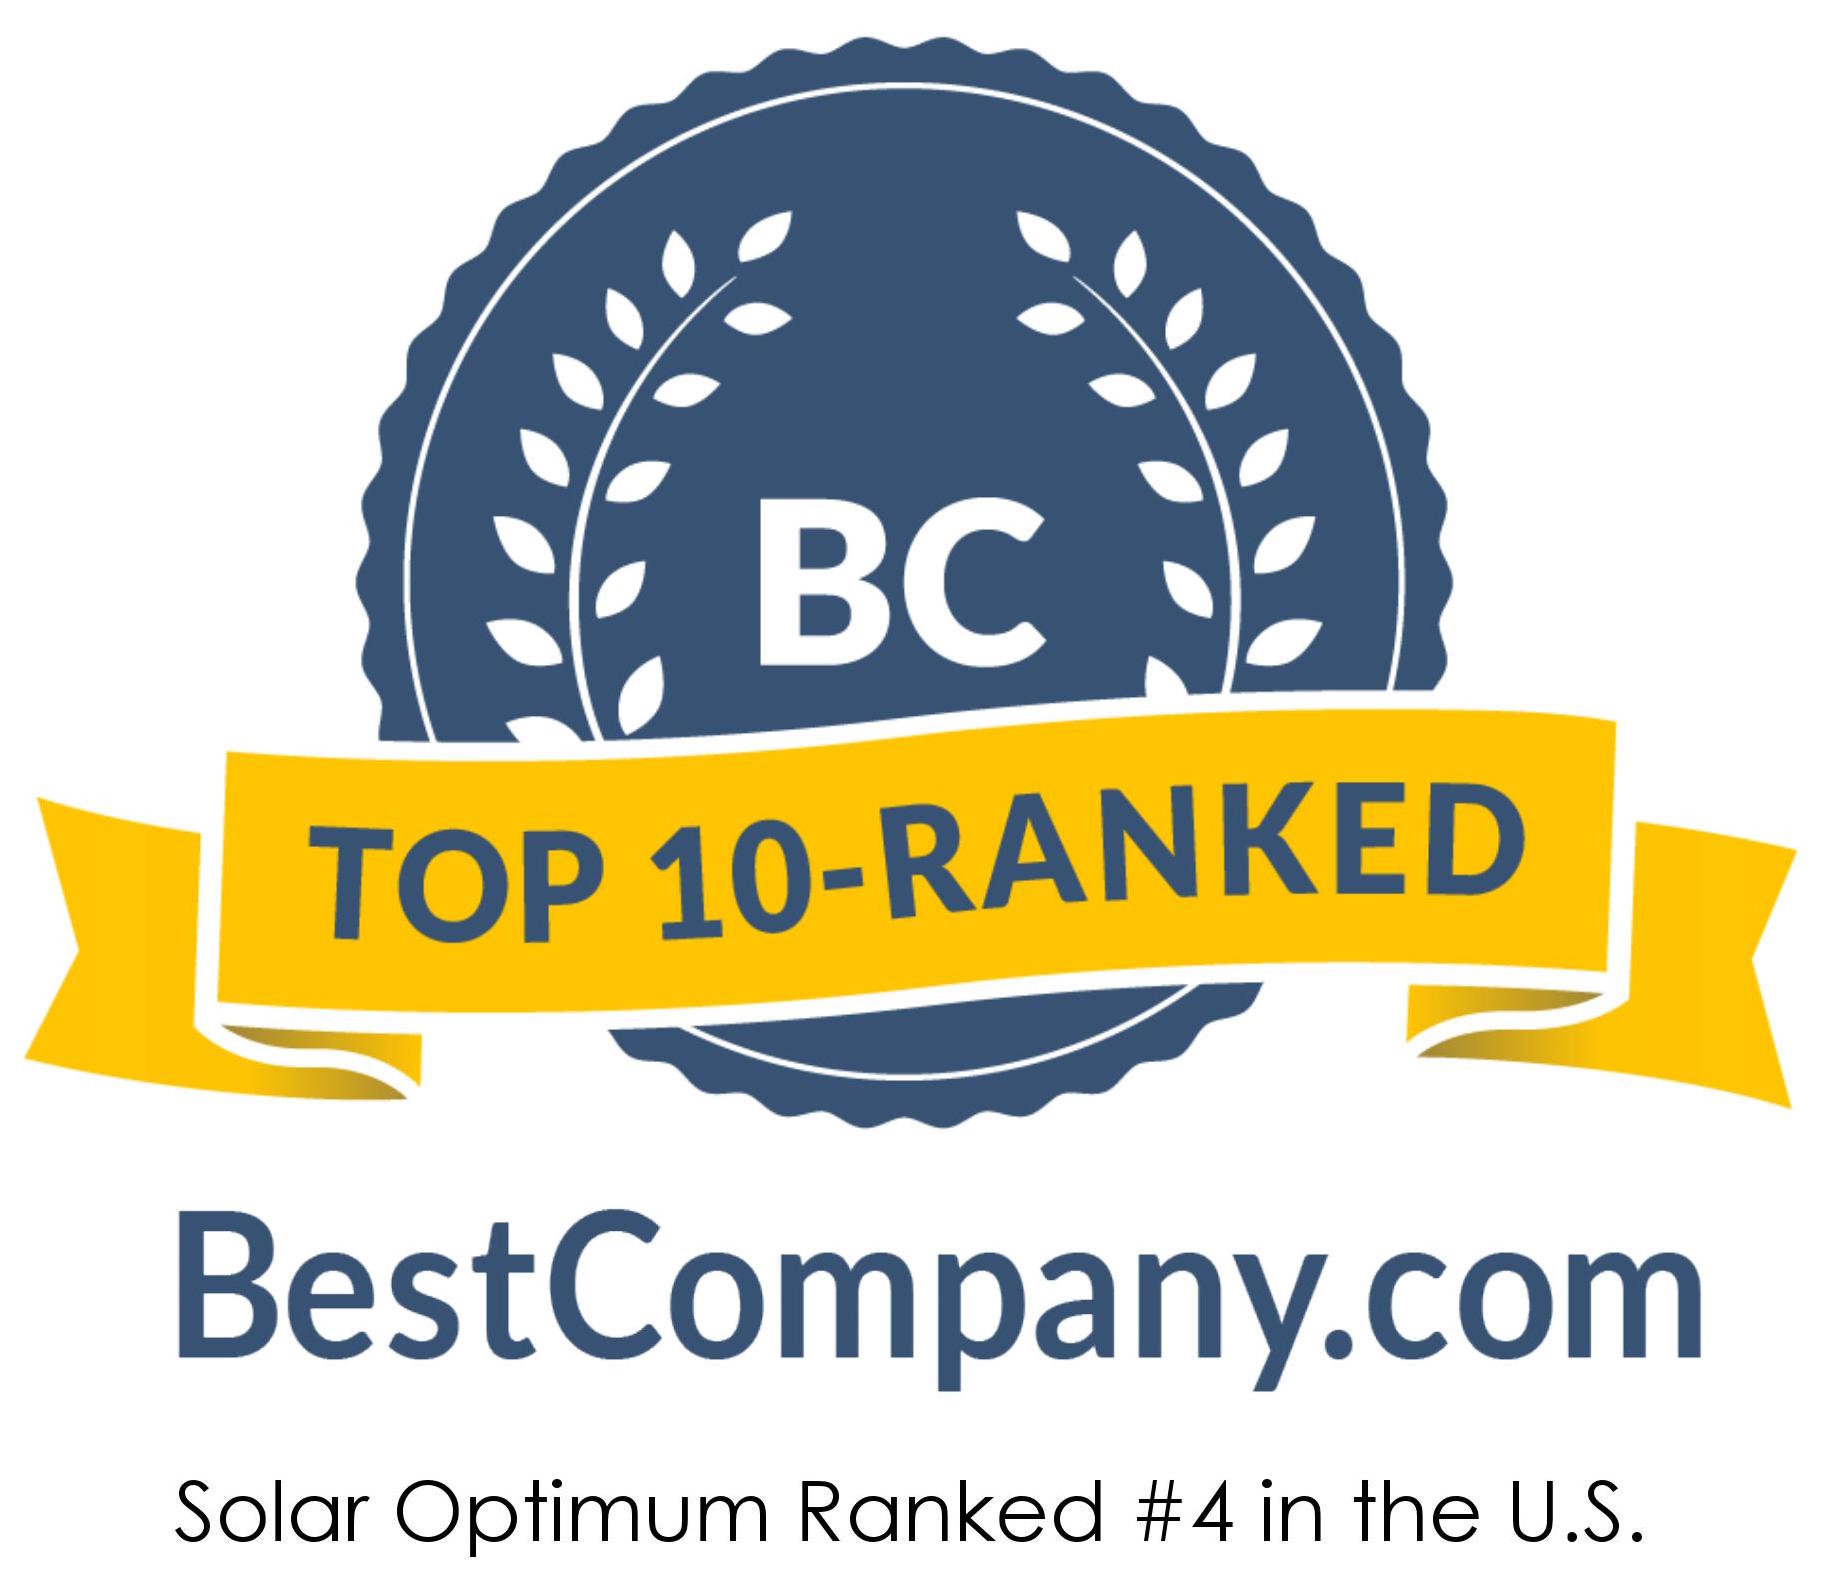 Premiere California Solar Panel Installer, Solar Optimum Earns Top Spot in Rankings